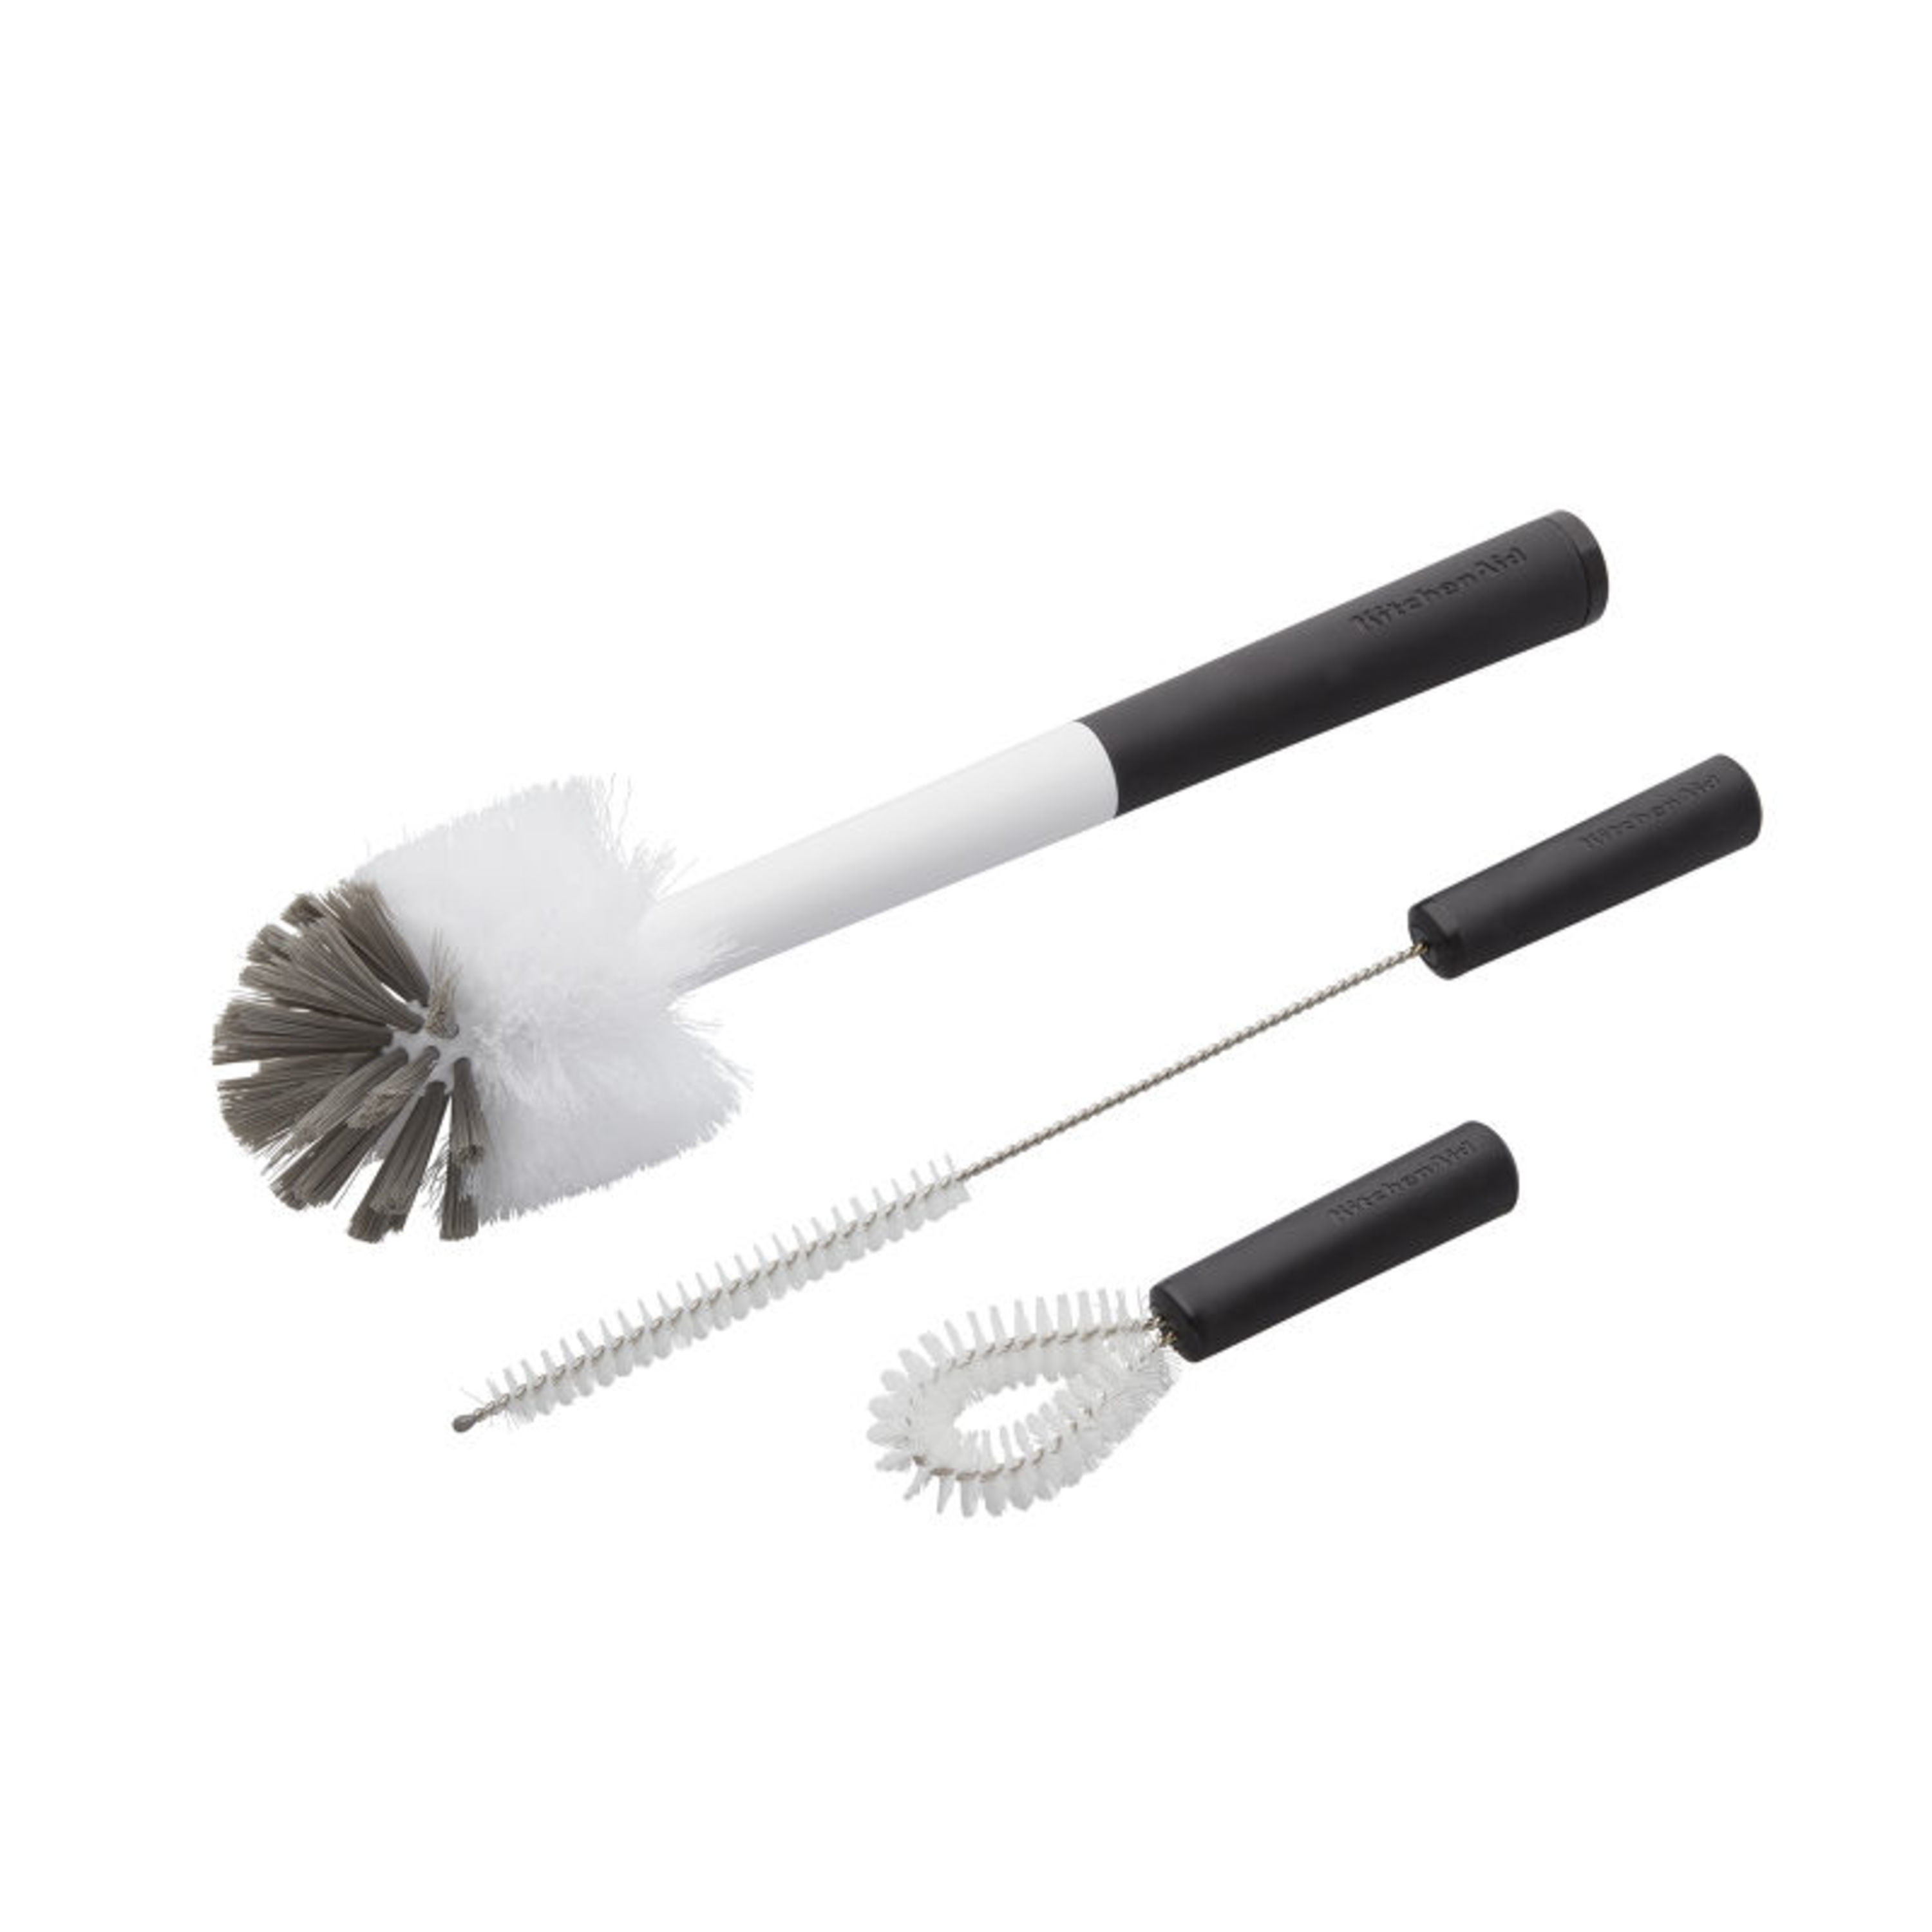 Kitchenaid 2-piece Appliance Cleaning Detail Brush Set in Black